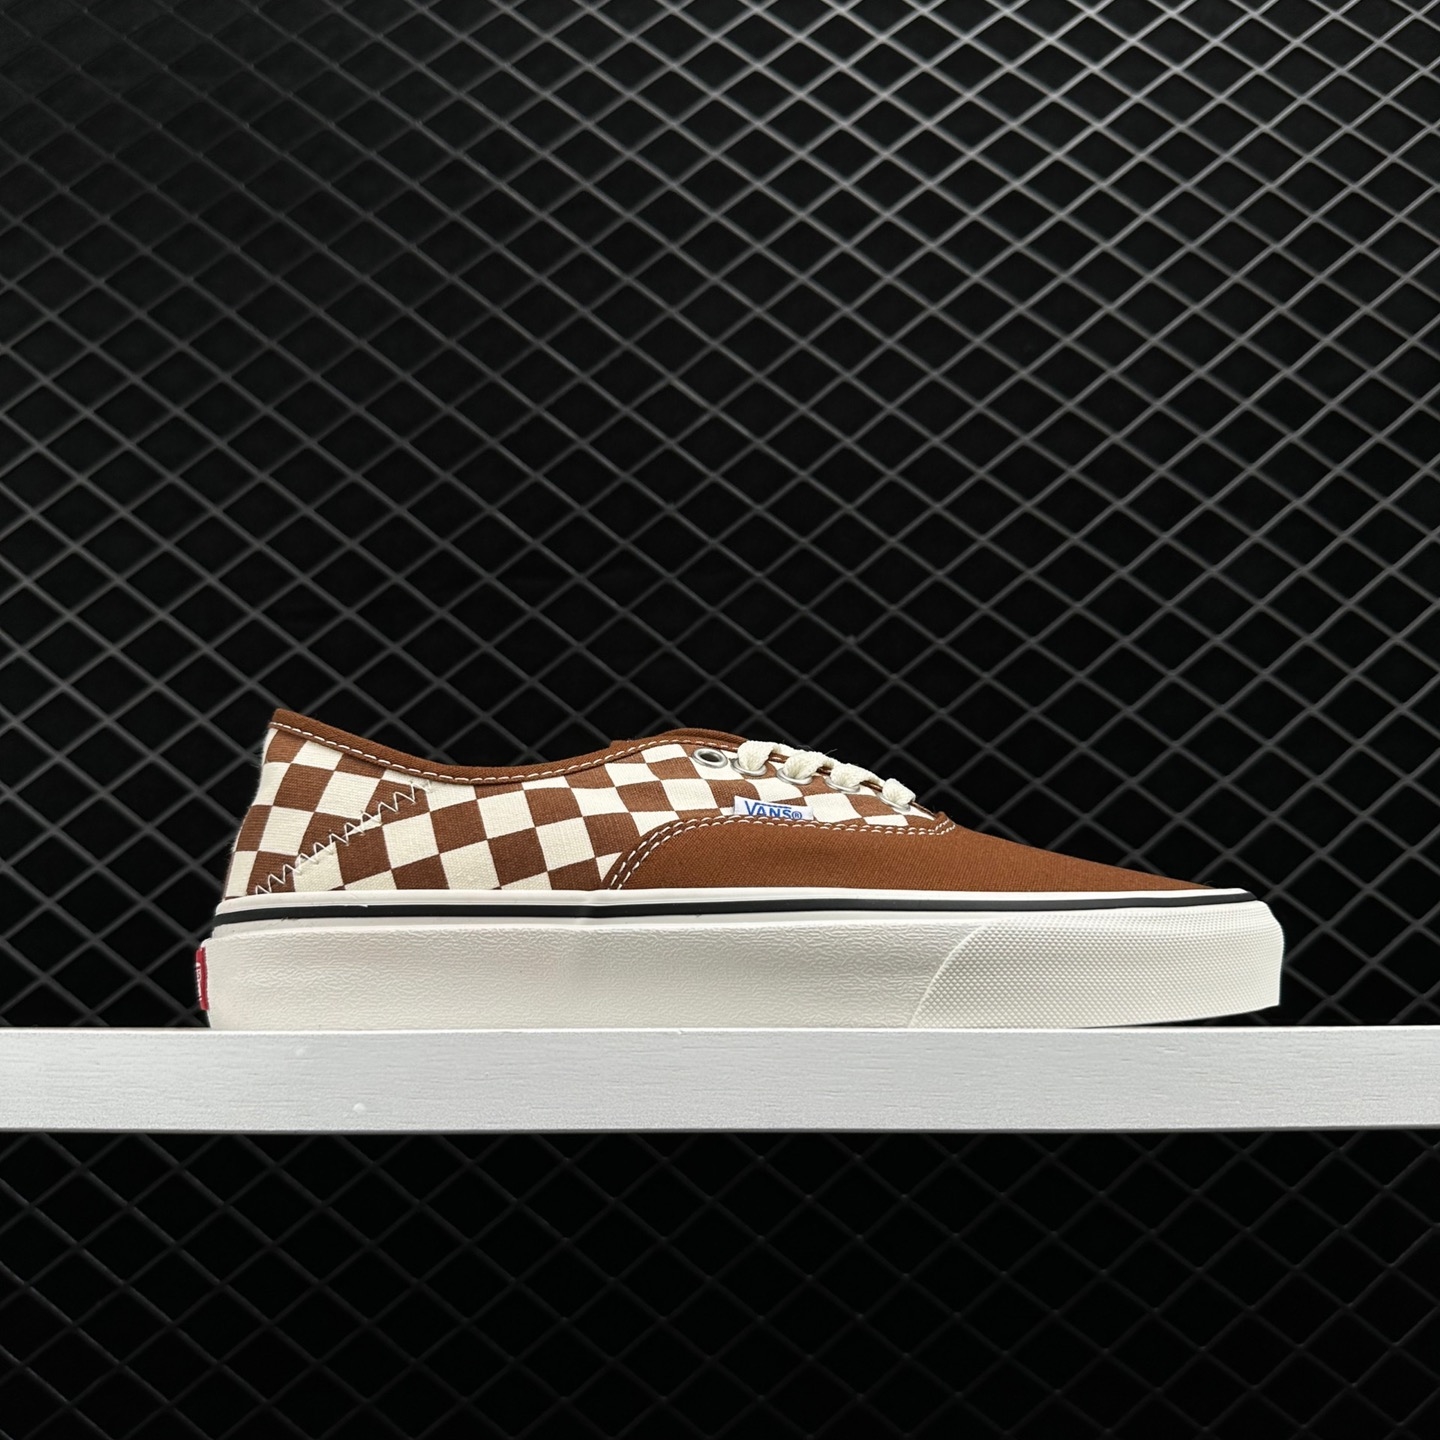 Vans Authentic Low Tops Brown White Skate Shoes Unisex - VN0A5HYPAXS